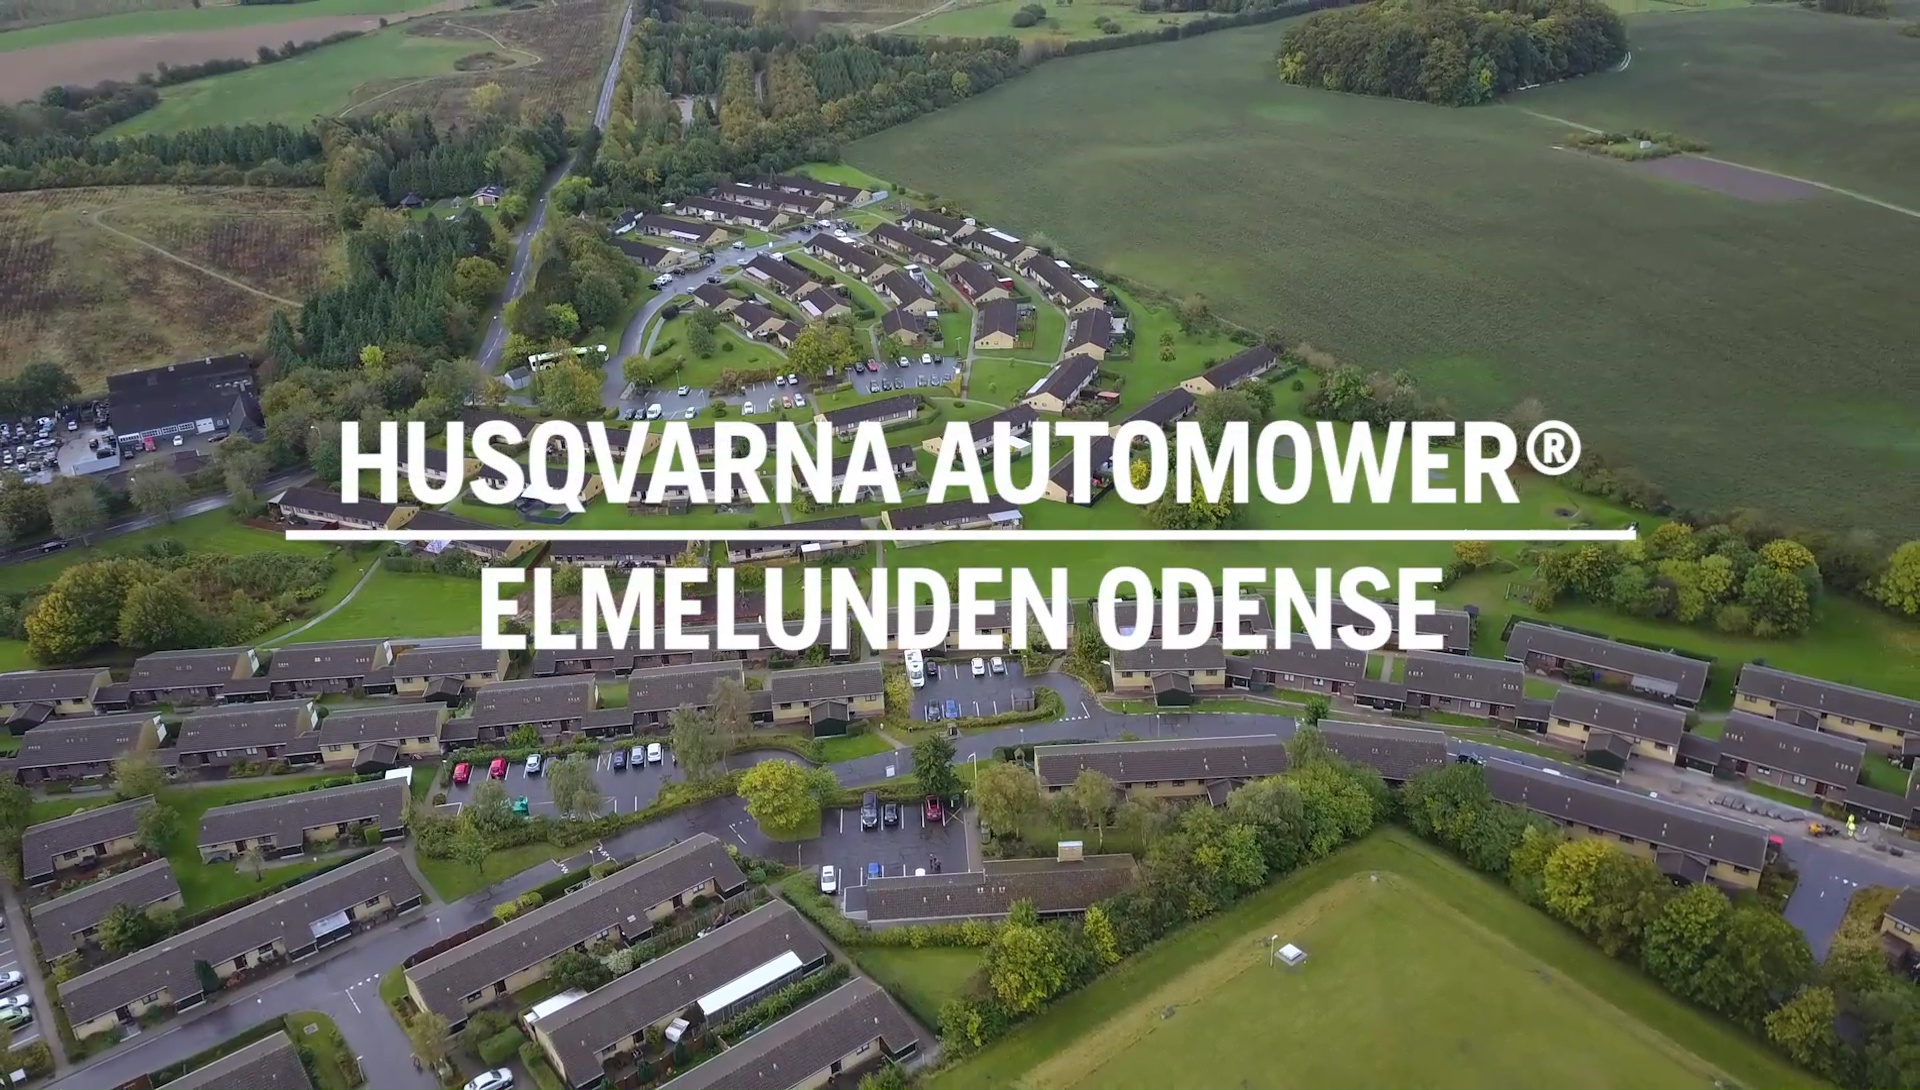 Testimonial Pro Automower - Civica, Denmark 3m40s 16:9 MASTER